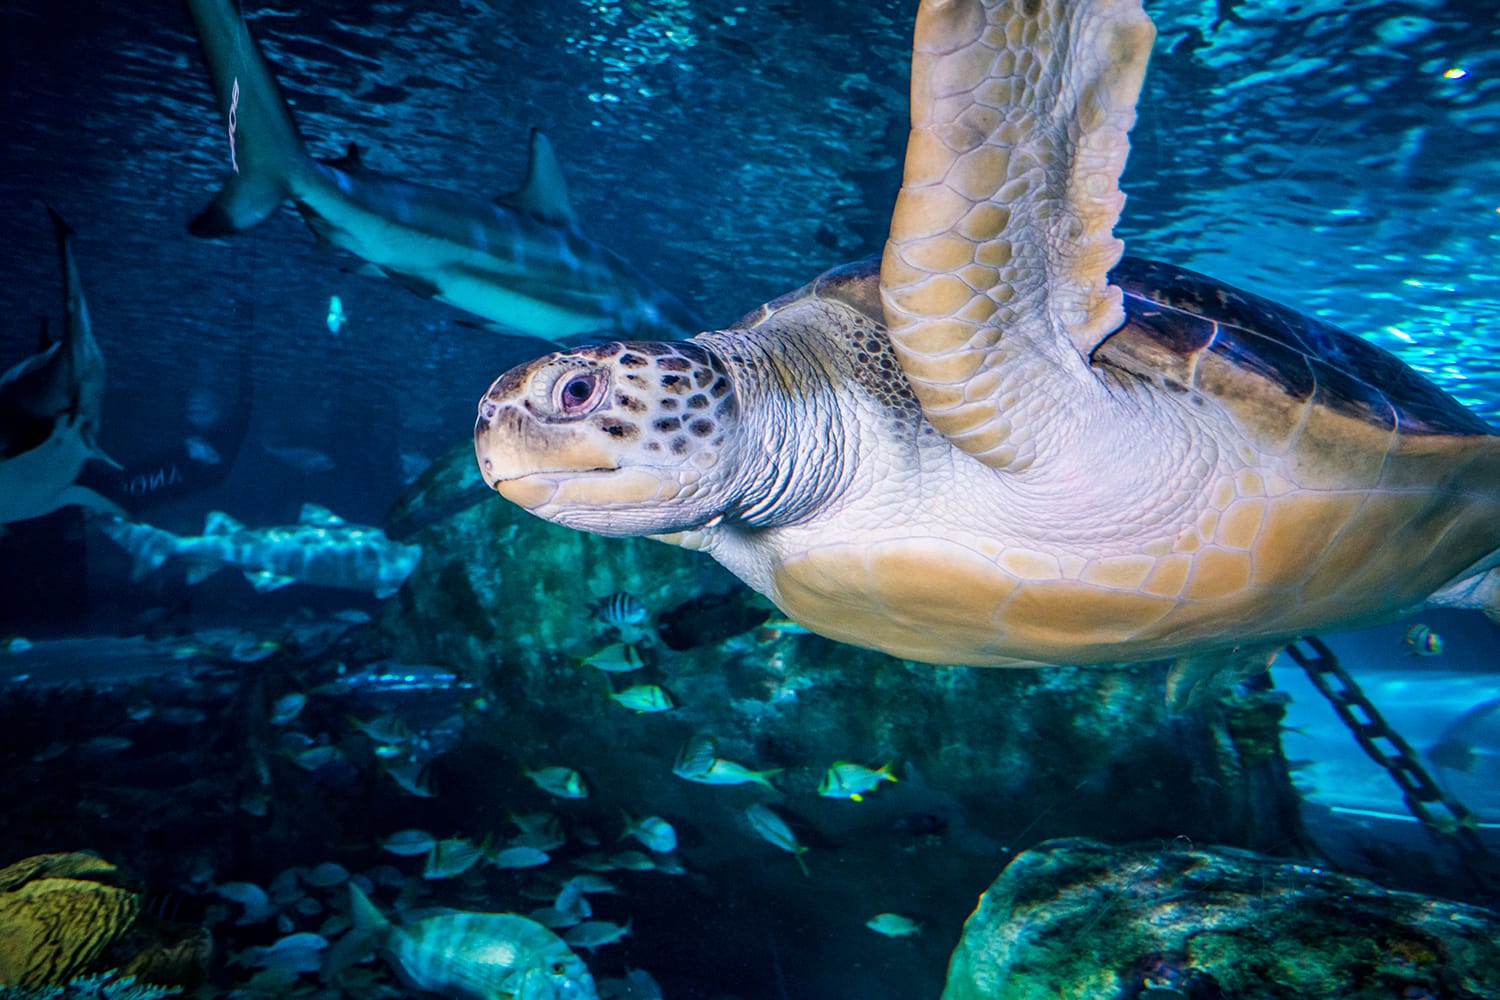 Sally the Green Sea Turtle at the Ripley's Aquarium in Gatlinburg, Tennessee, USA